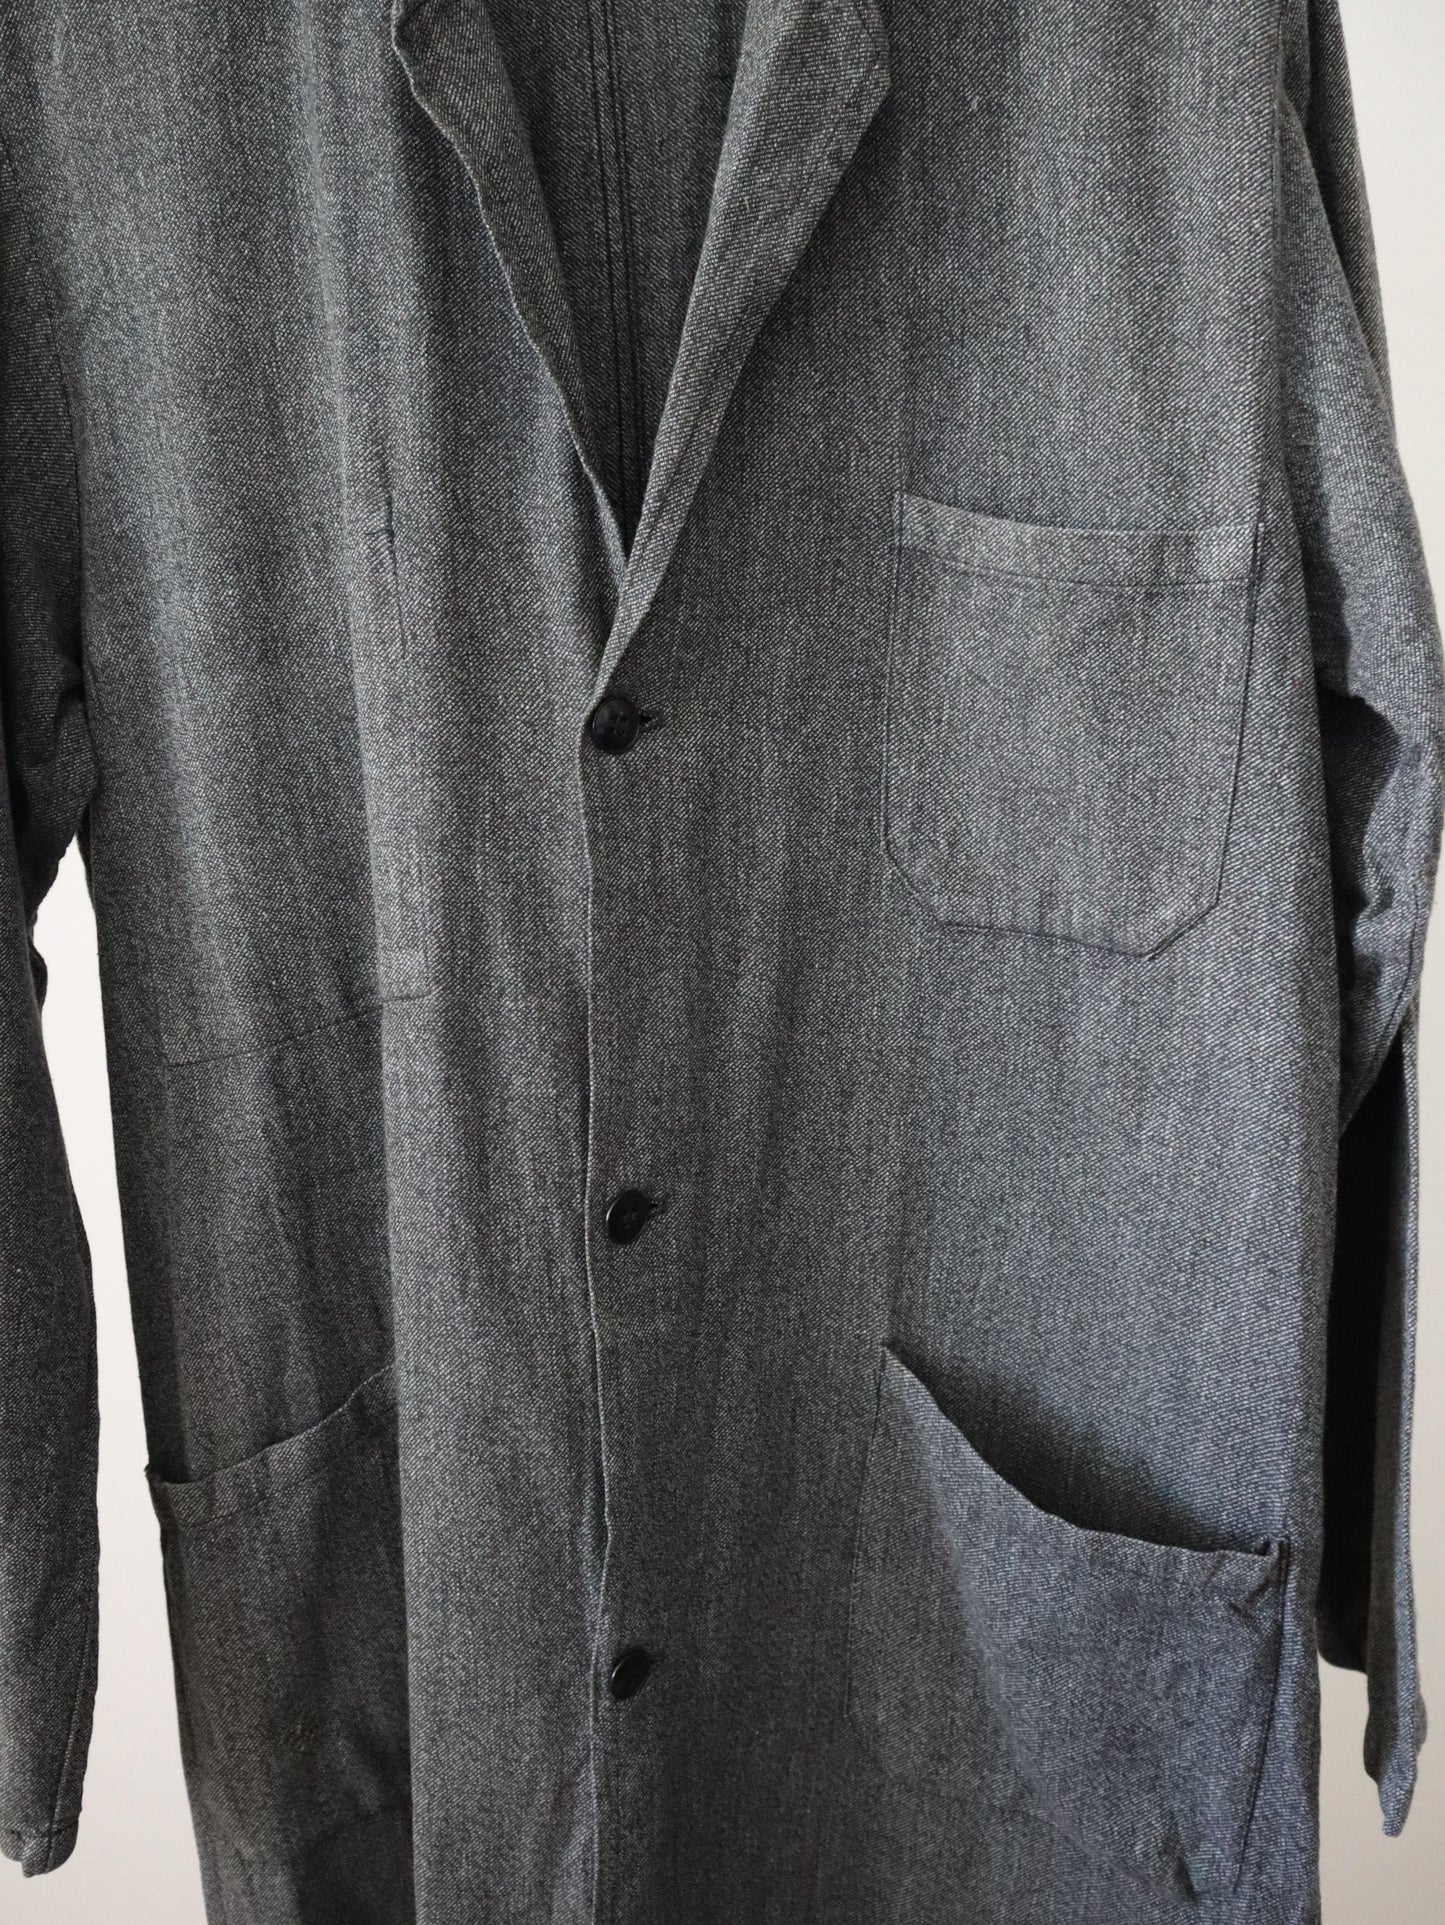 1940s French Grey Workwear Duster Jacket Coat Cotton Chore